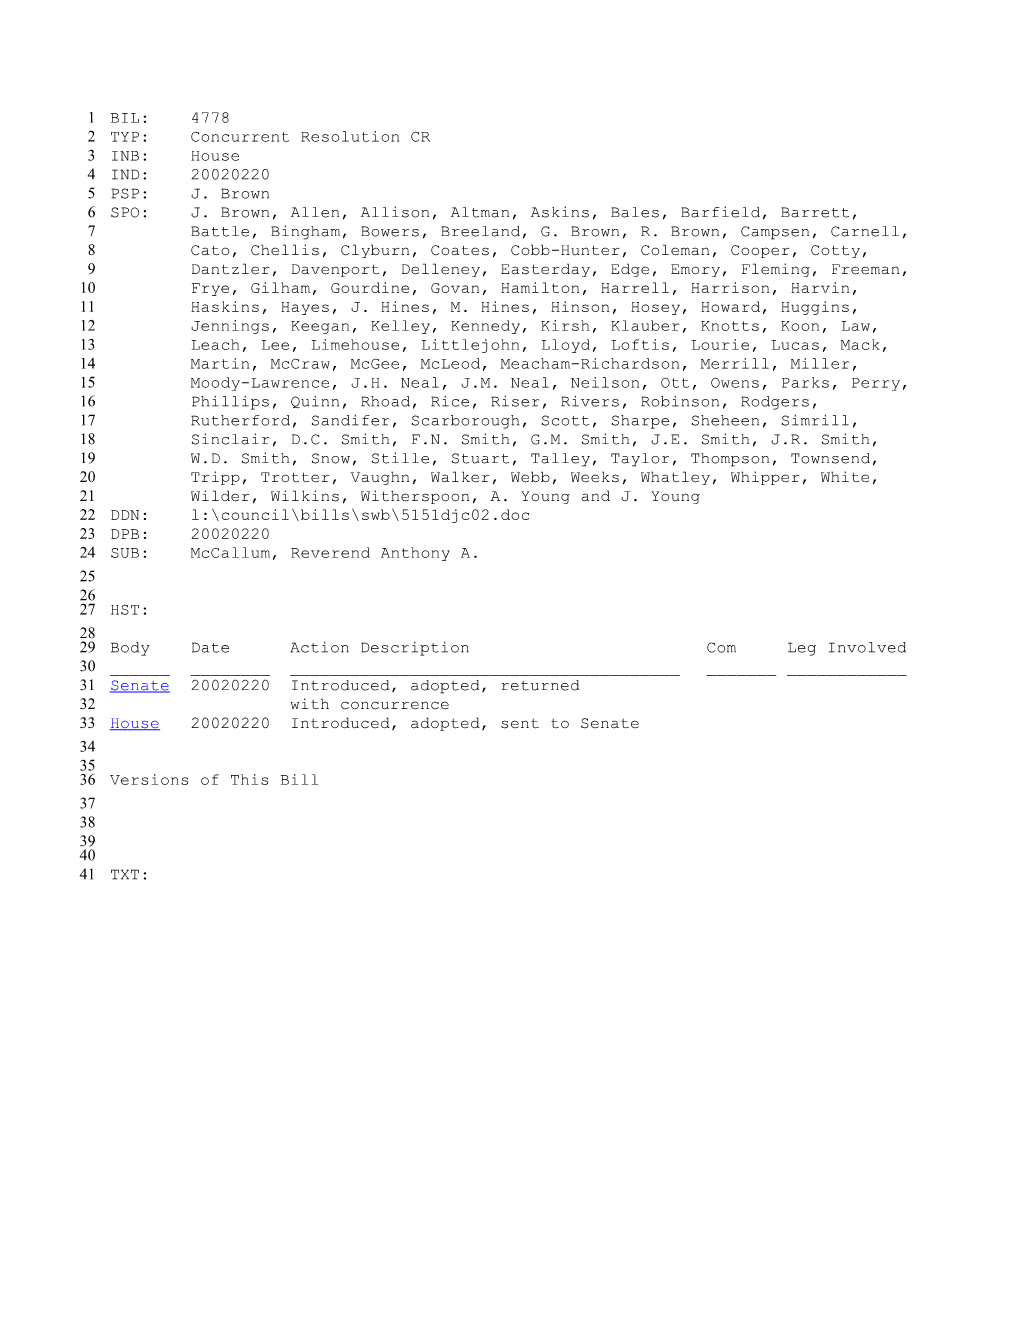 2001-2002 Bill 4778: Mccallum, Reverend Anthony A. - South Carolina Legislature Online